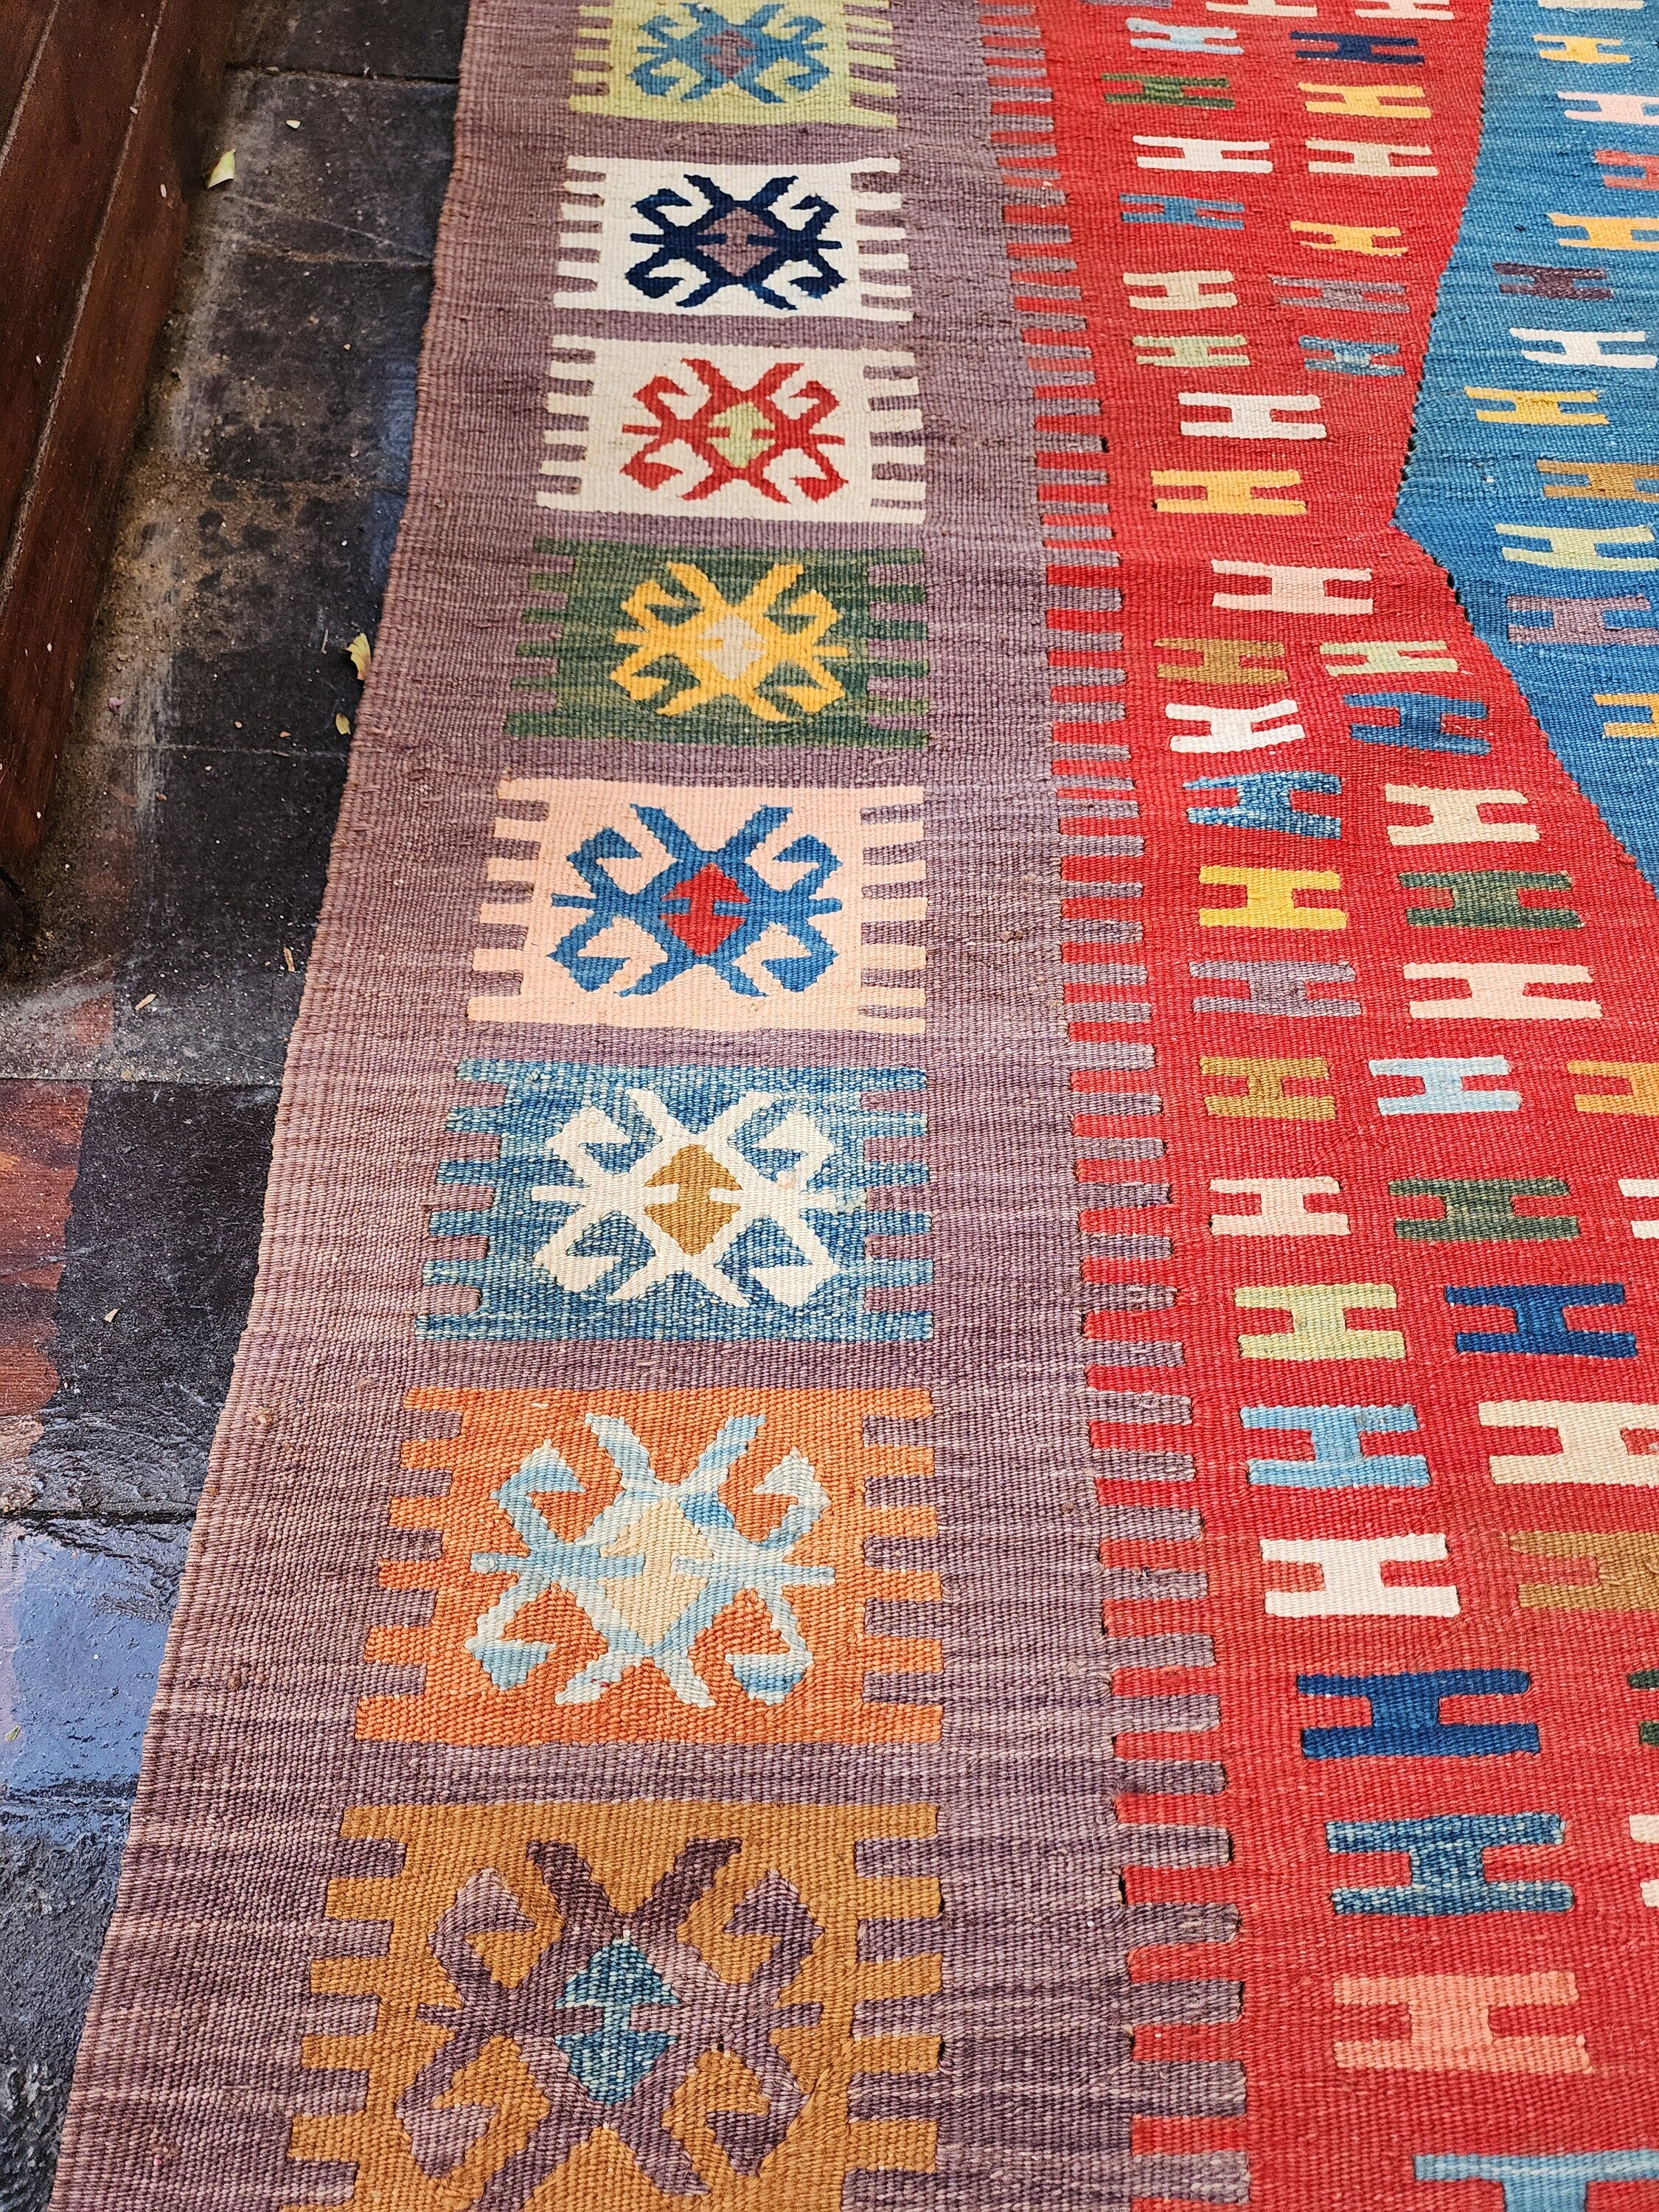 Vintage Decor Persian Area Kilim Living Room, Moroccan Style Handwoven Wool Rug, Bohemian Decor Rustic Rug, Colorful Turkish Rug 6'5'x4'9'ft